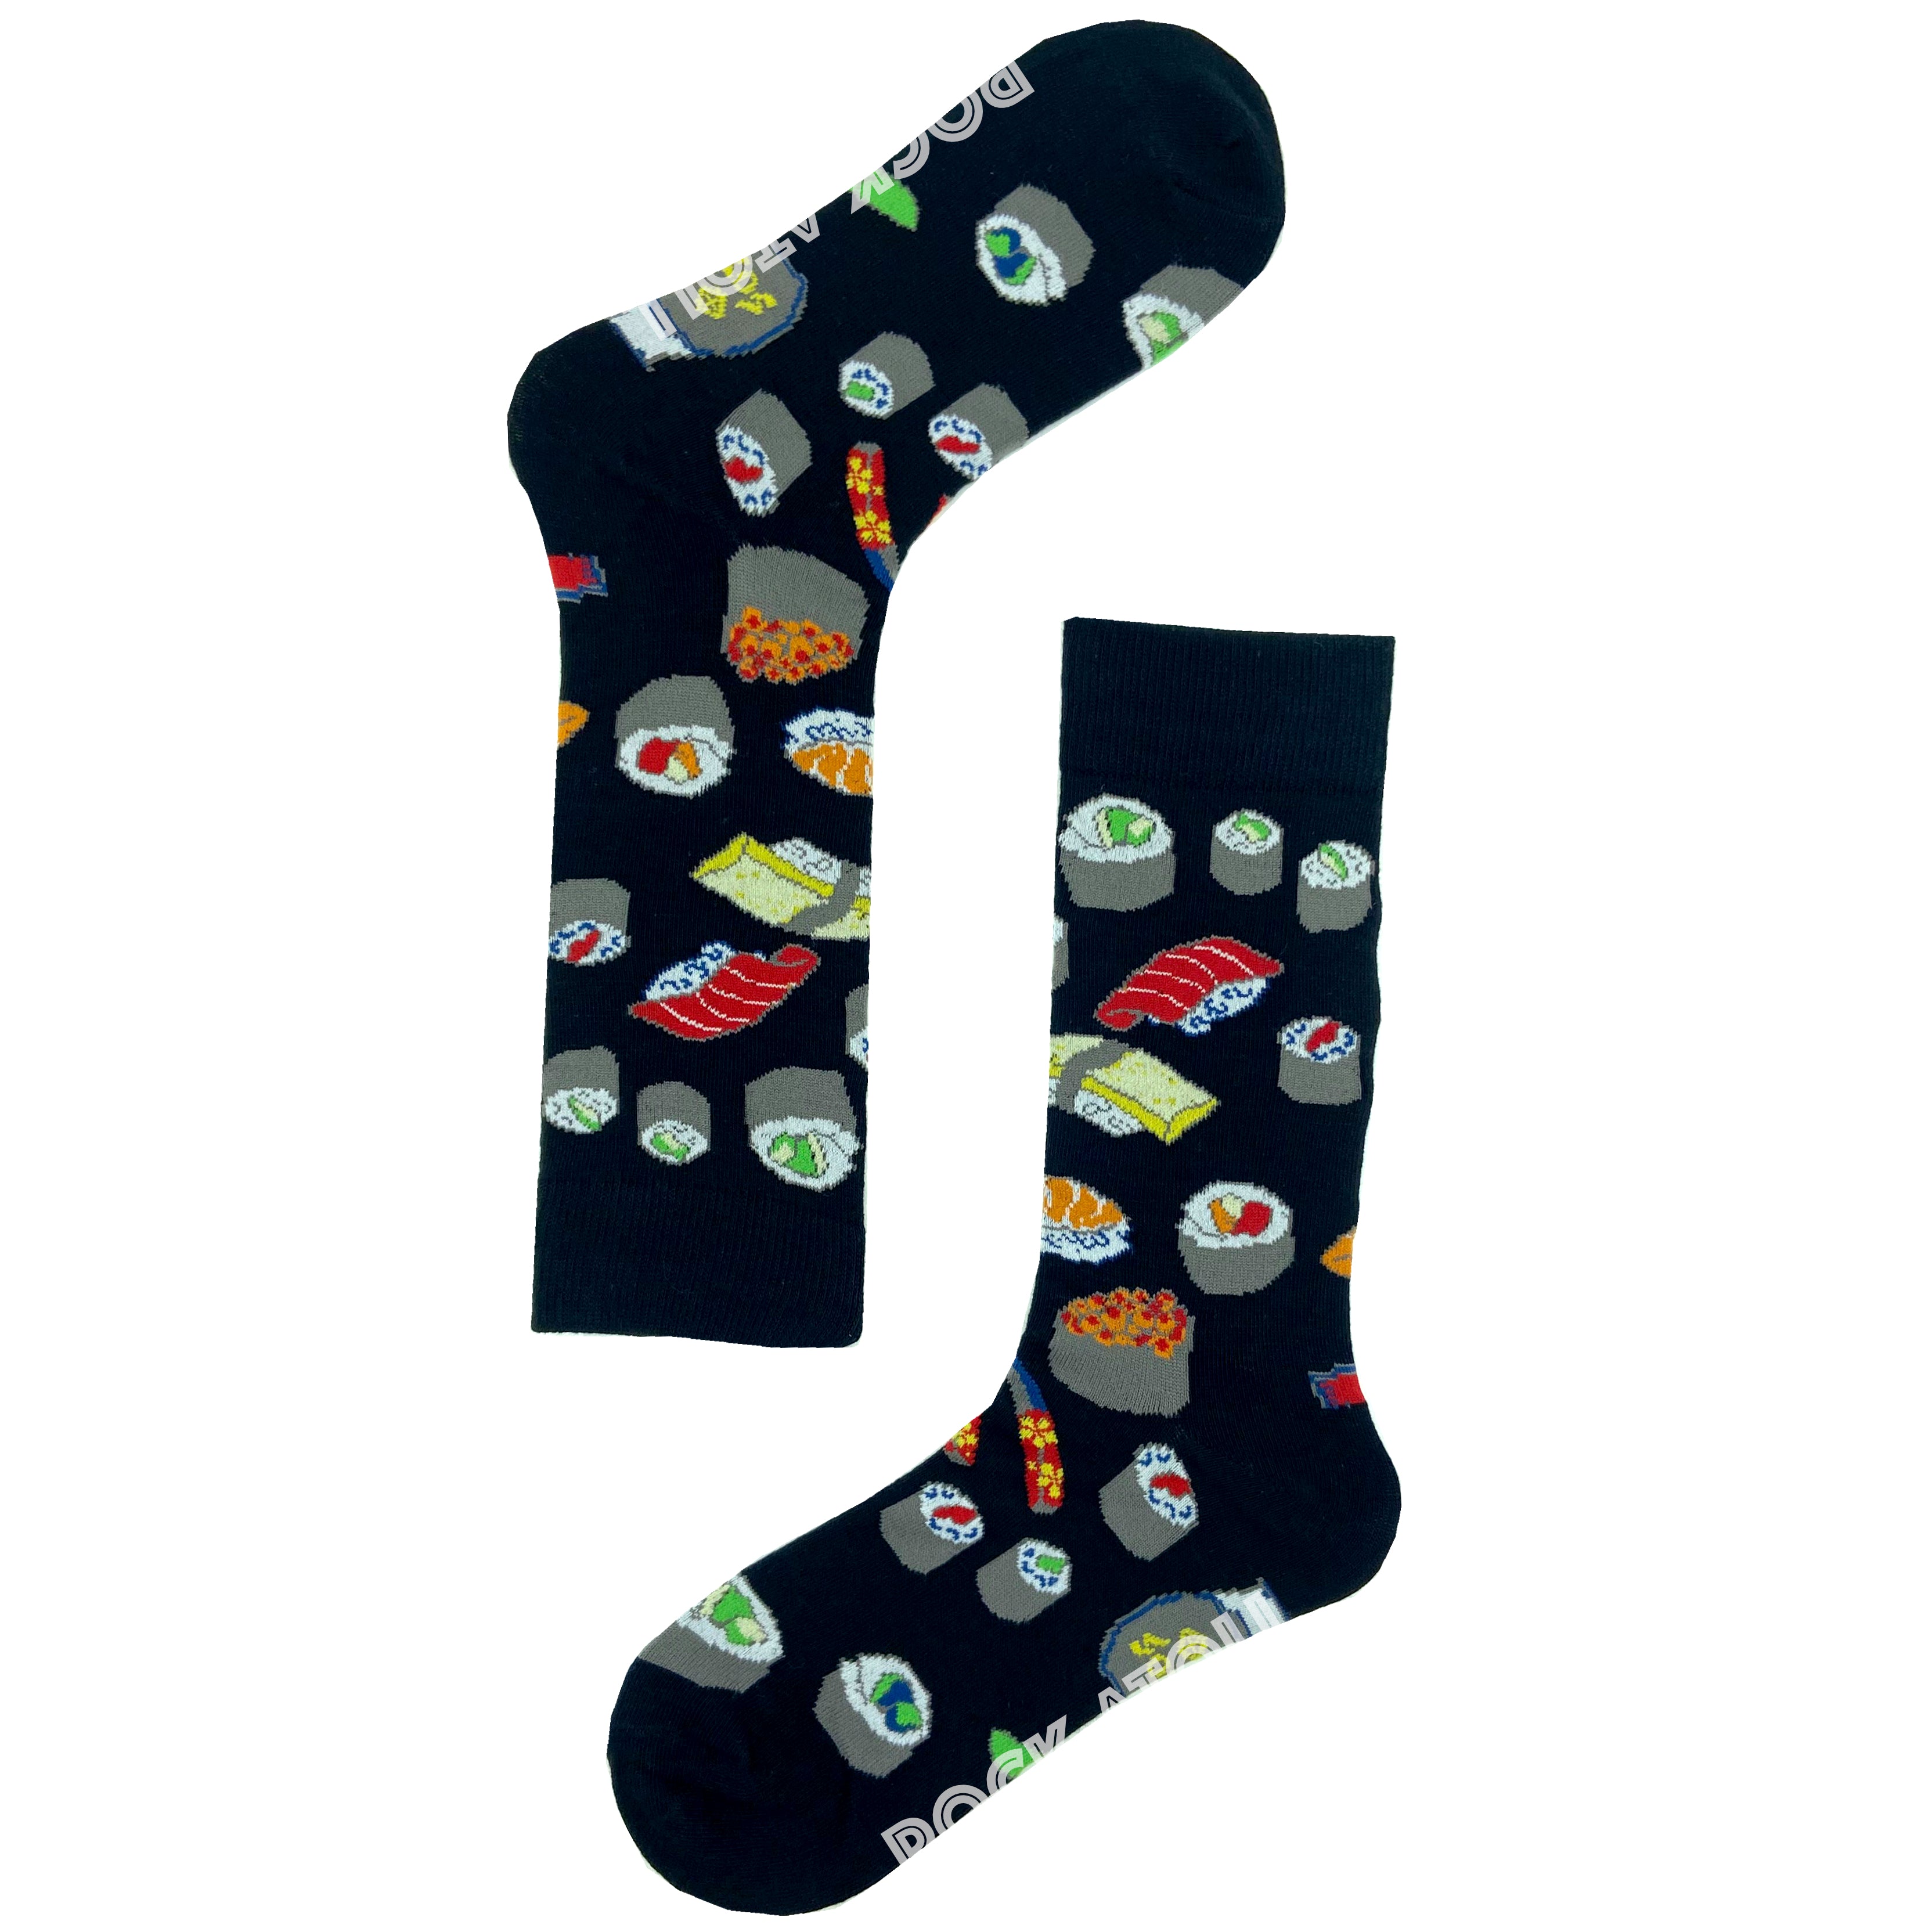 Food Themed Sushi Maki Roll Patterned Unisex Novelty Socks in Black